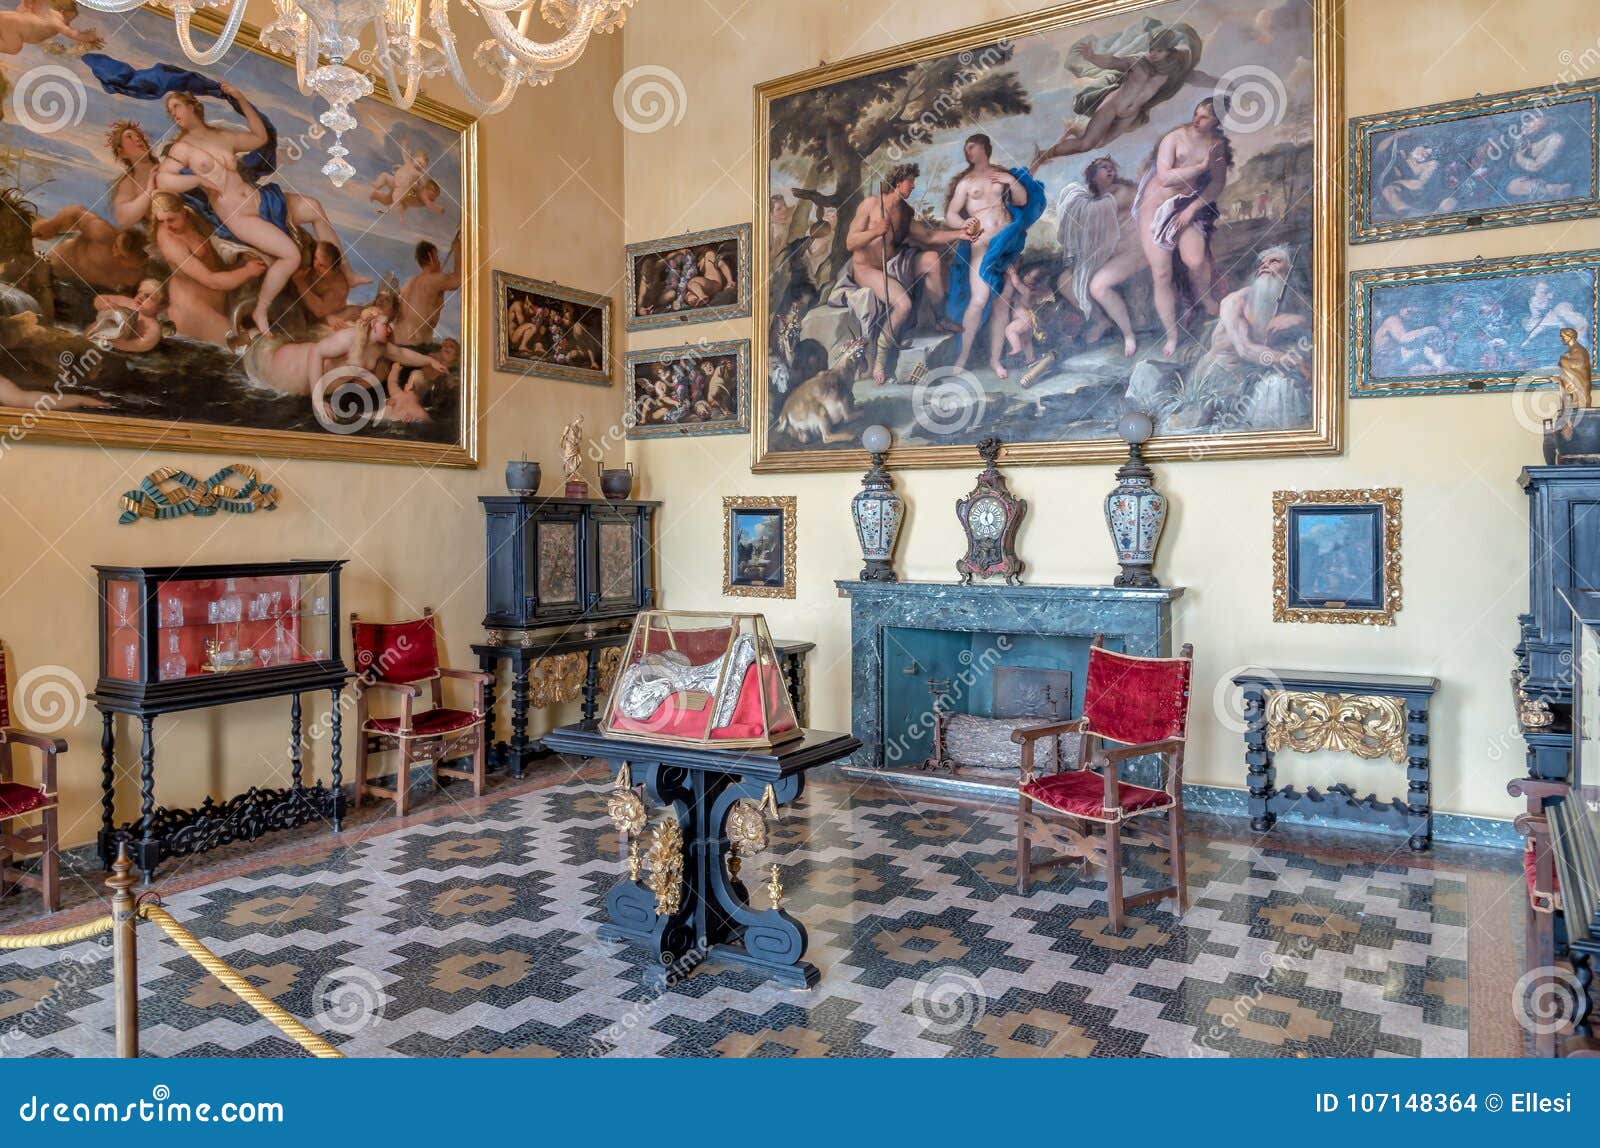 Stresa, Verbania, Italy - July 28, 2016: Interiors of the Borromeo Palace located on the Bella Island on the lake Maggiore.